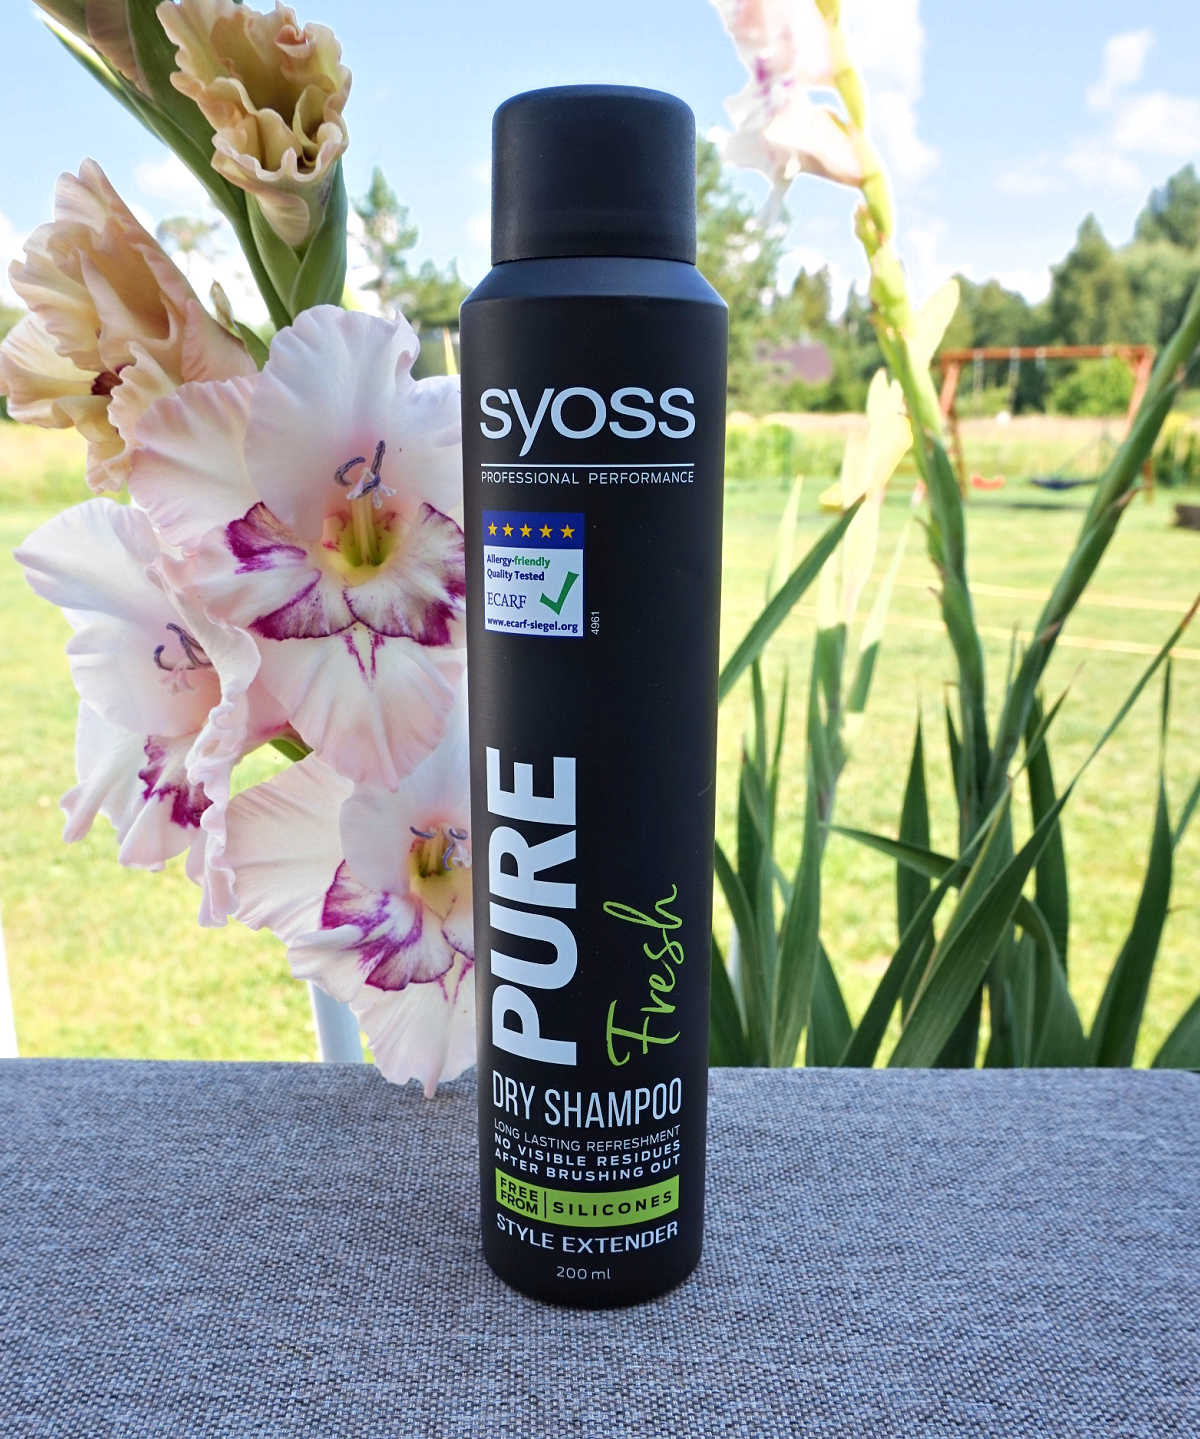 Syoss Pure Fresh Dry Shampoo review